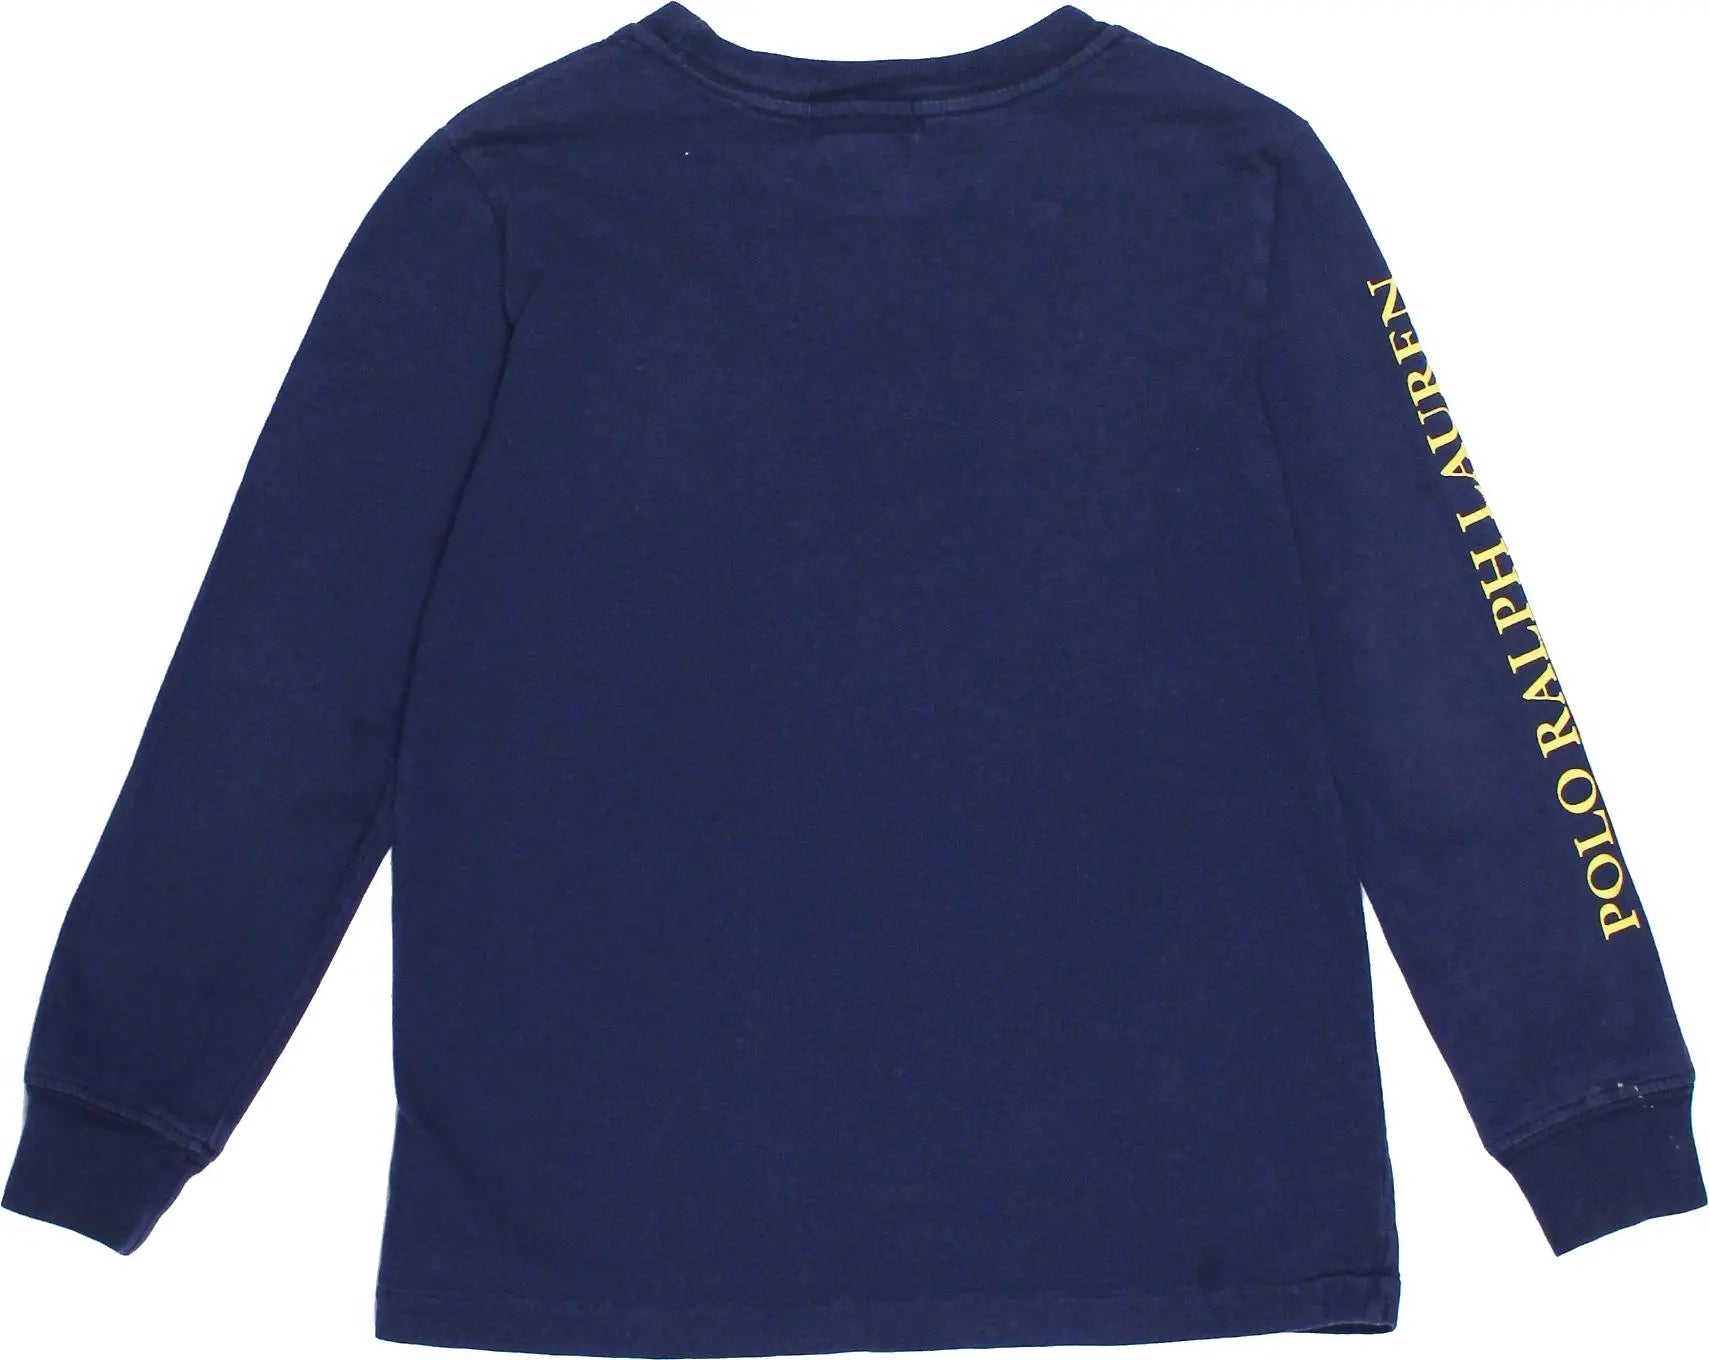 Ralph Lauren - Blue Long Sleeve Shirt by Ralph Lauren- ThriftTale.com - Vintage and second handclothing